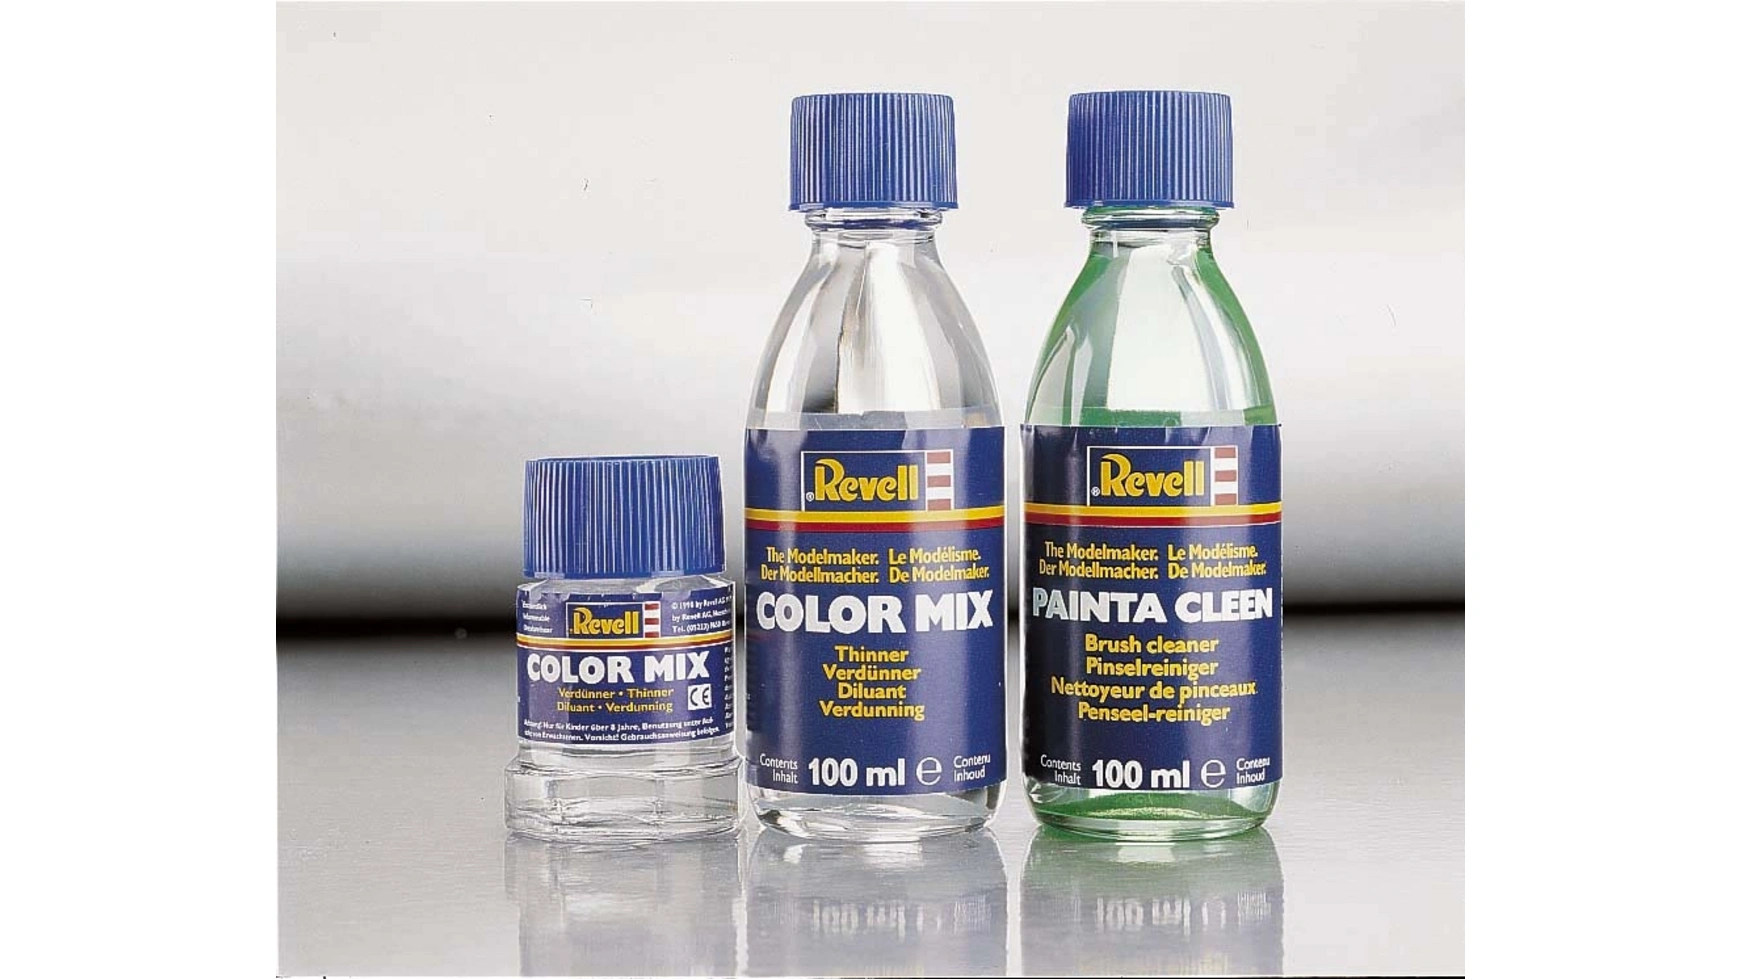 Revell Painta Clean, очиститель кистей 100мл цена и фото